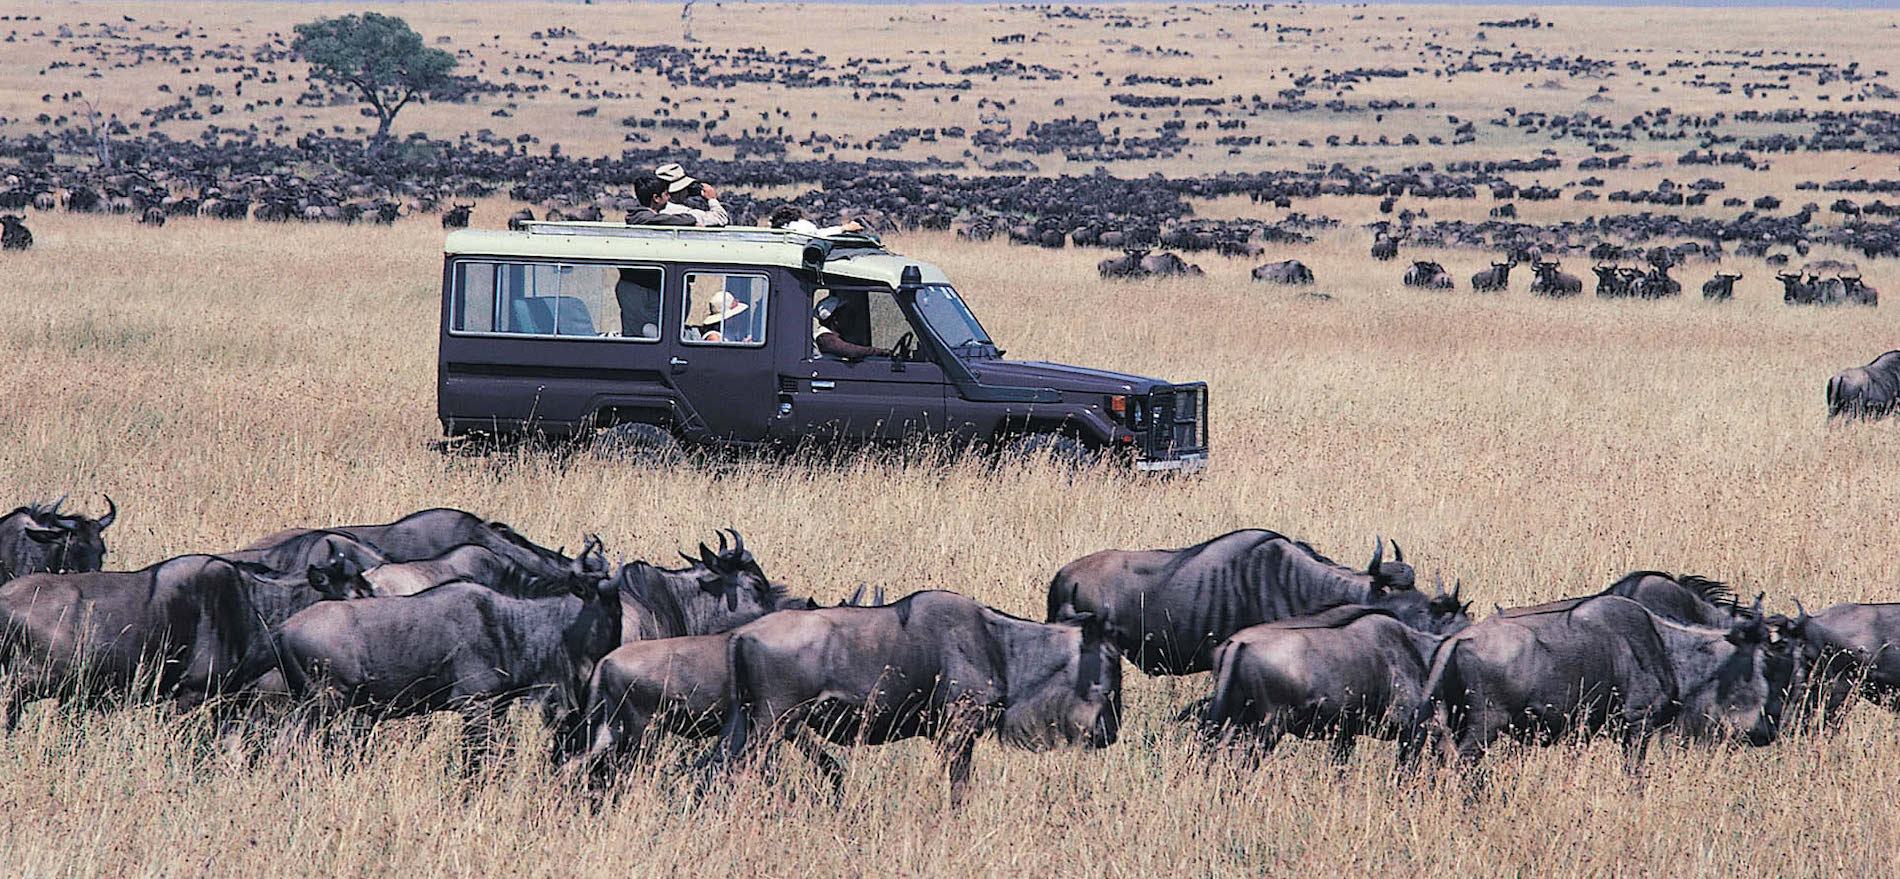 Visit Maasai Mara National Reserve 